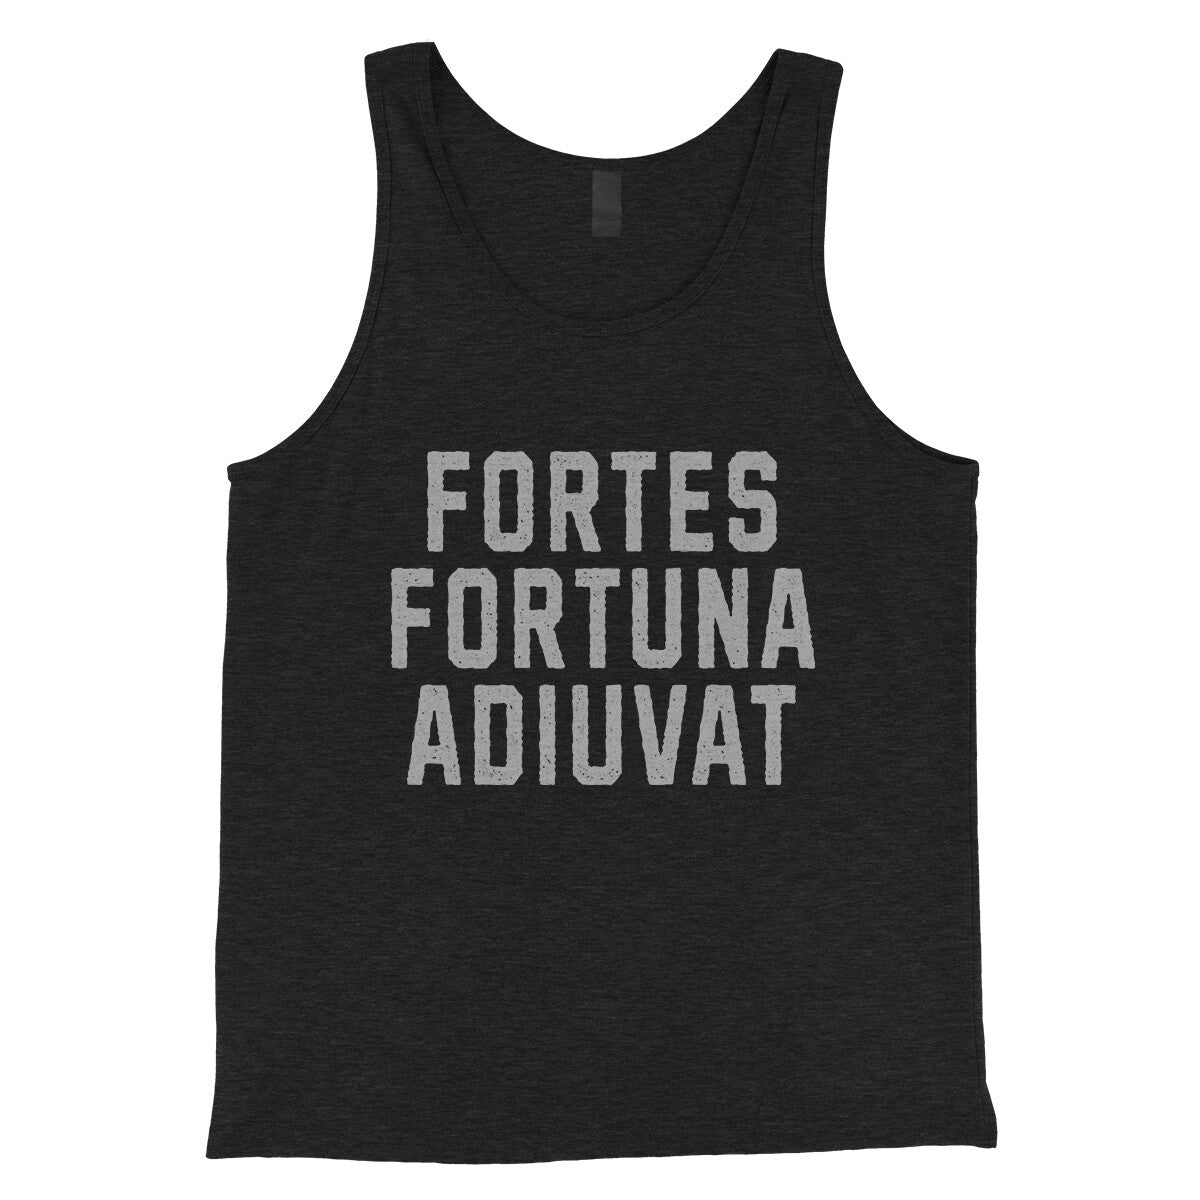 Fortes Fortuna Adiuvat in Charcoal Black TriBlend Color